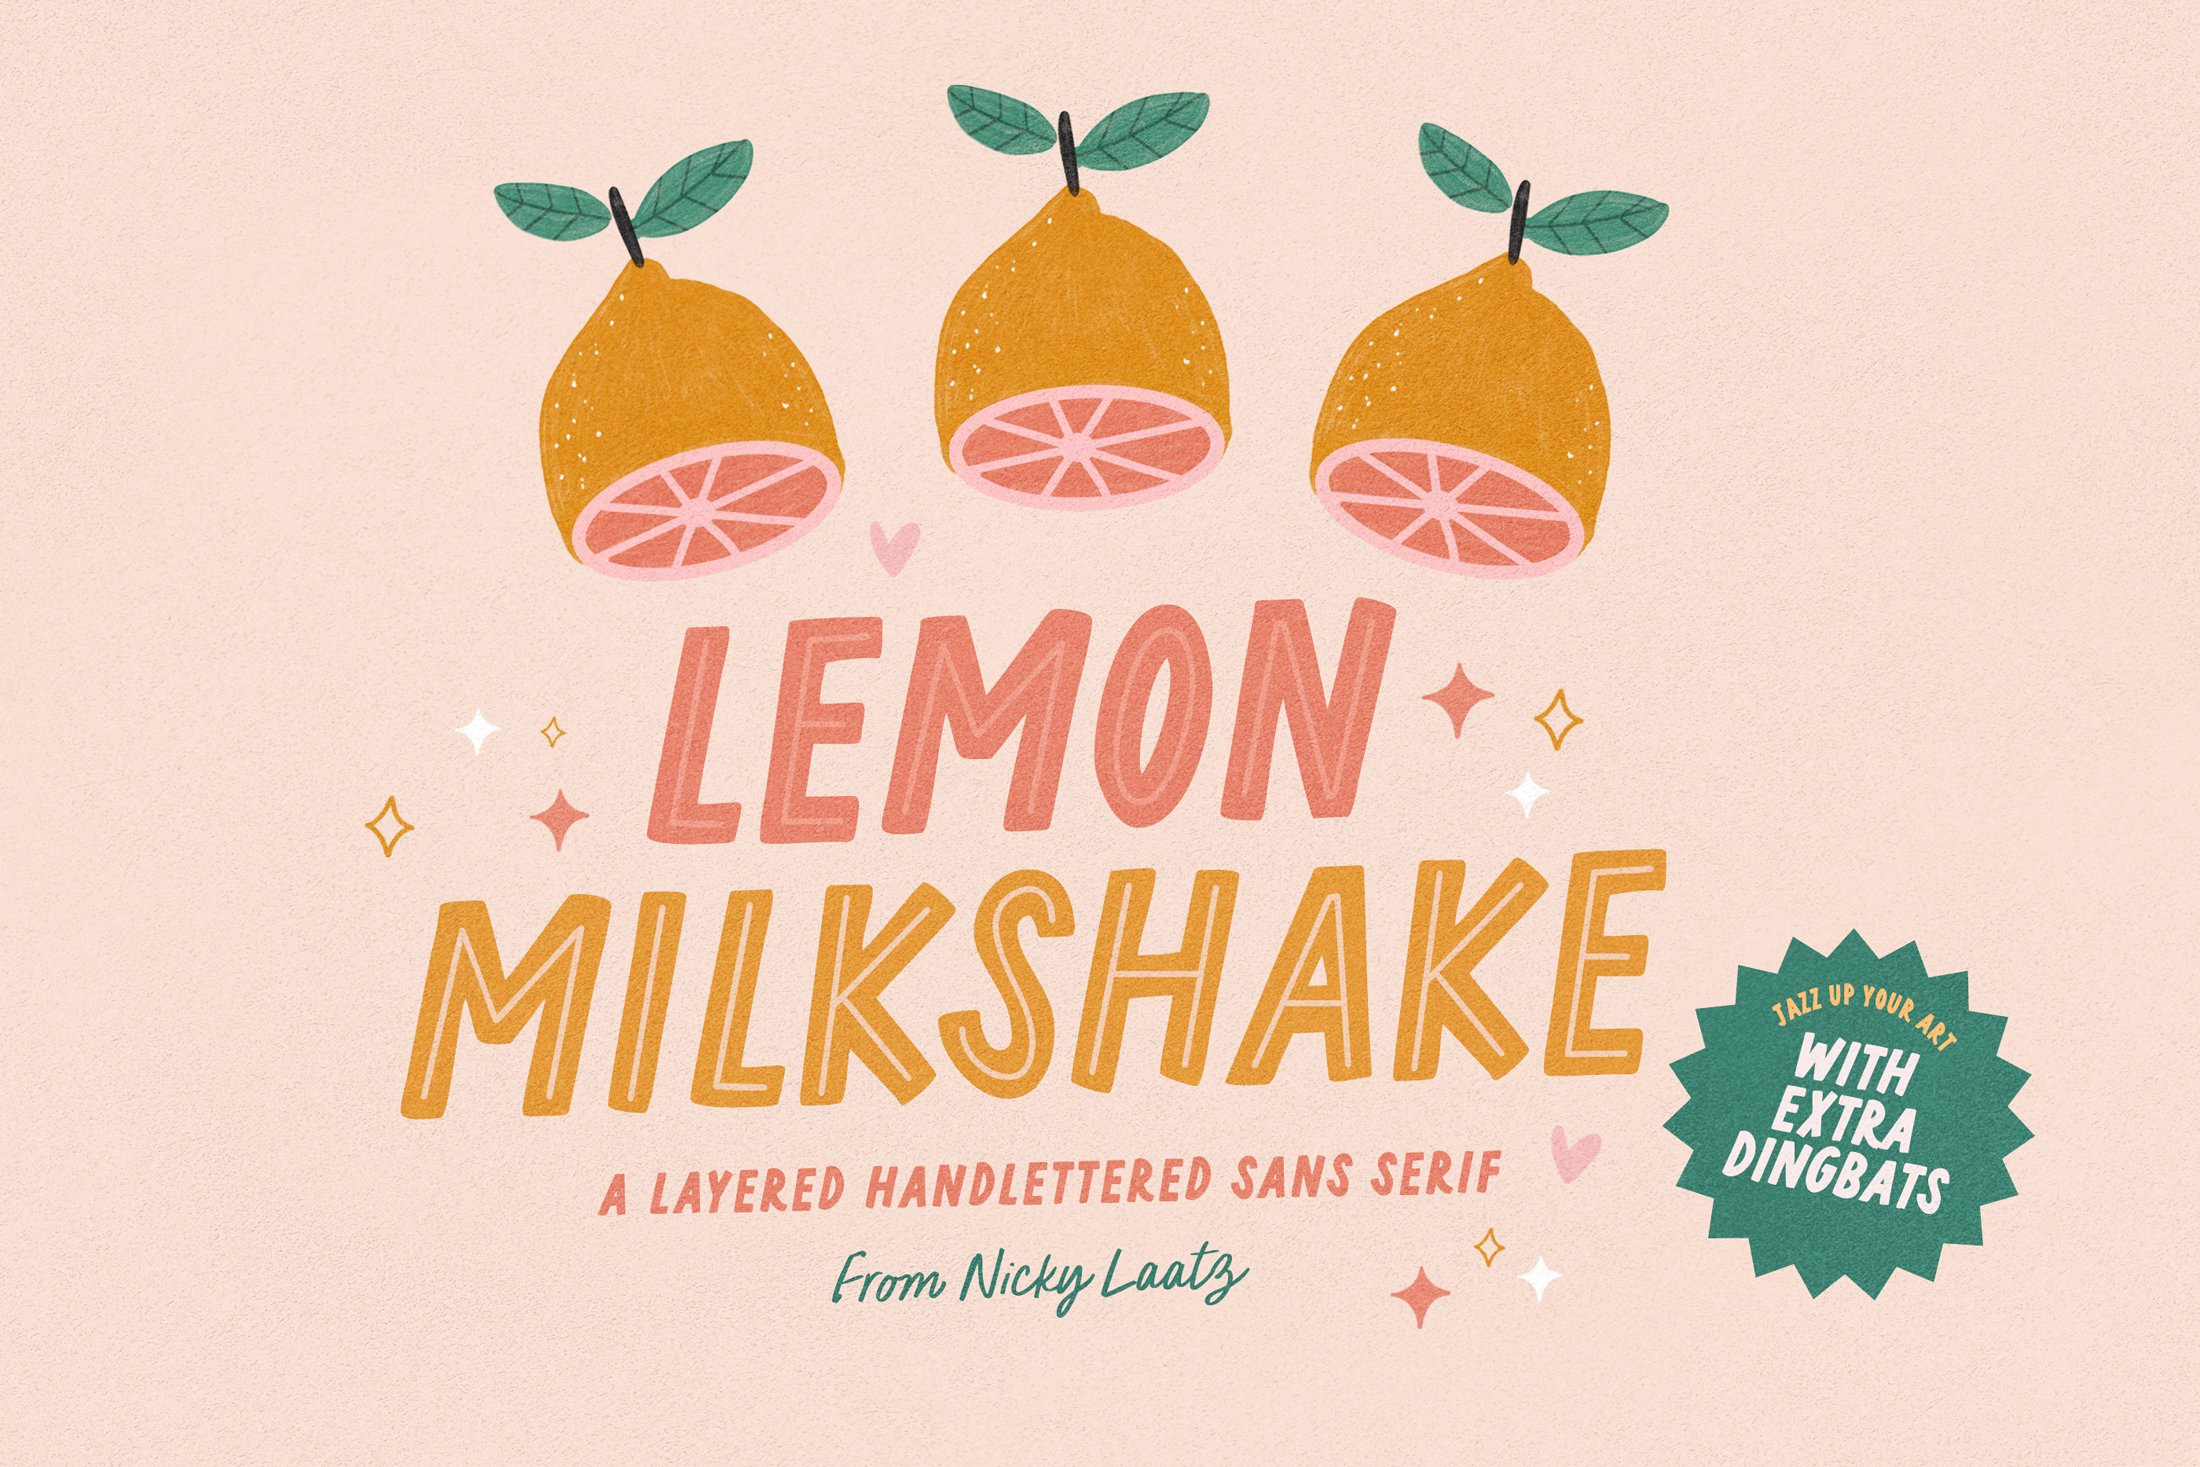 Lemon Milkshake Typeface and Dings cover image.